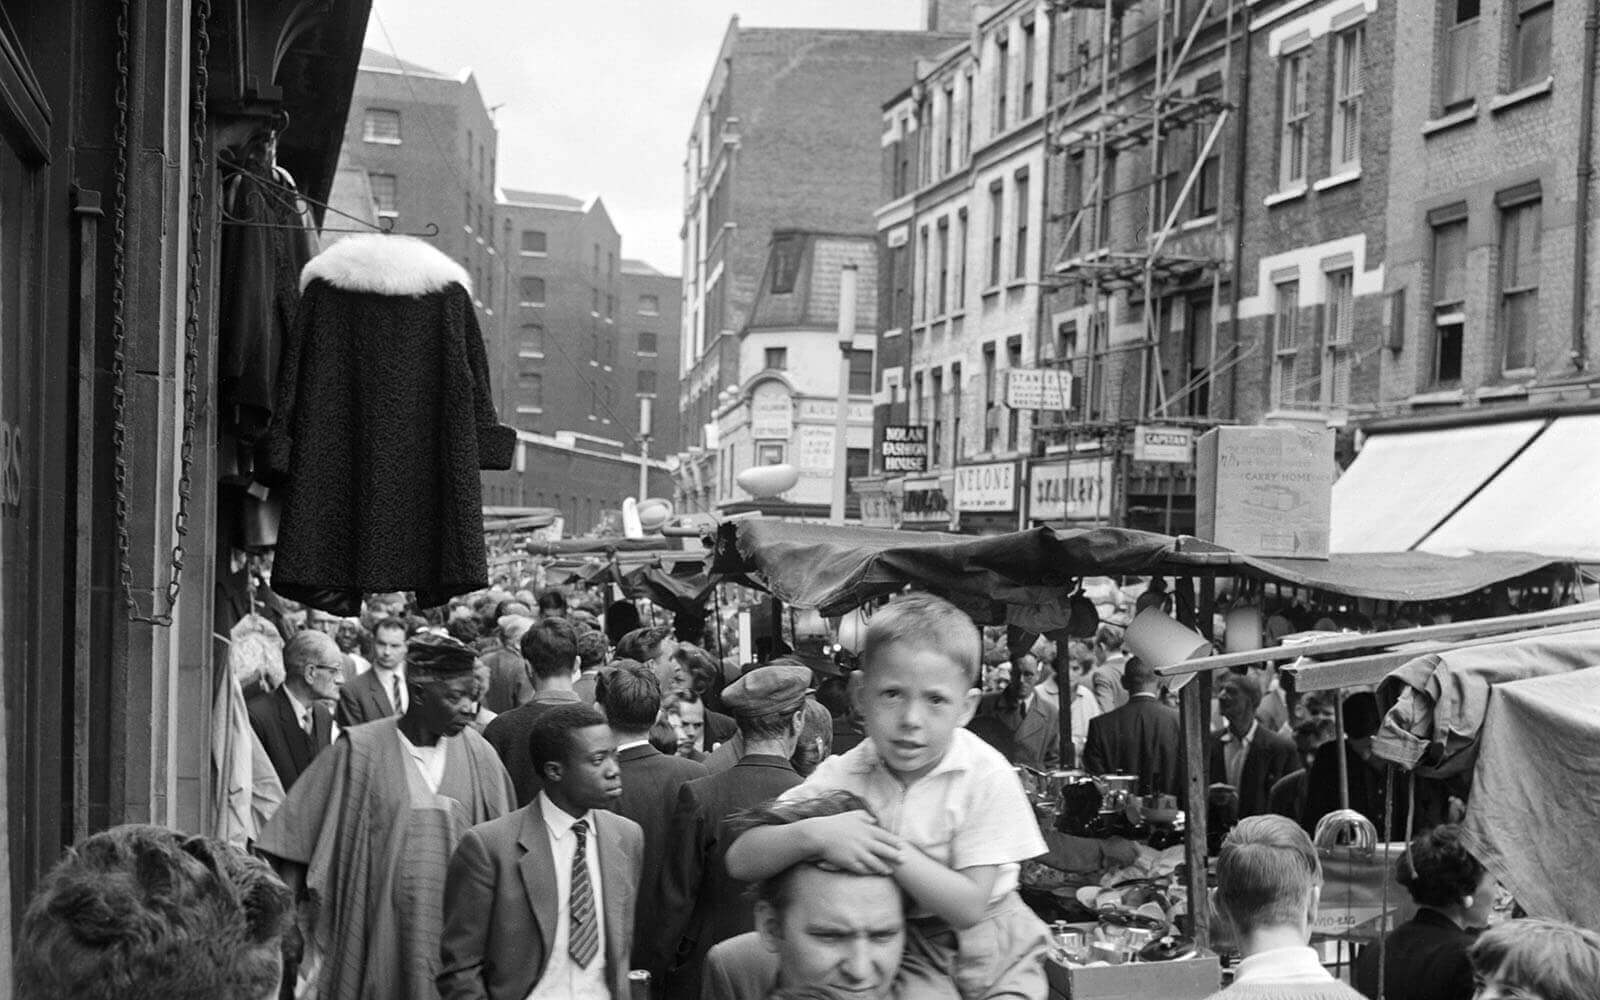 whitechapel street 1967 - Alamy.jpg